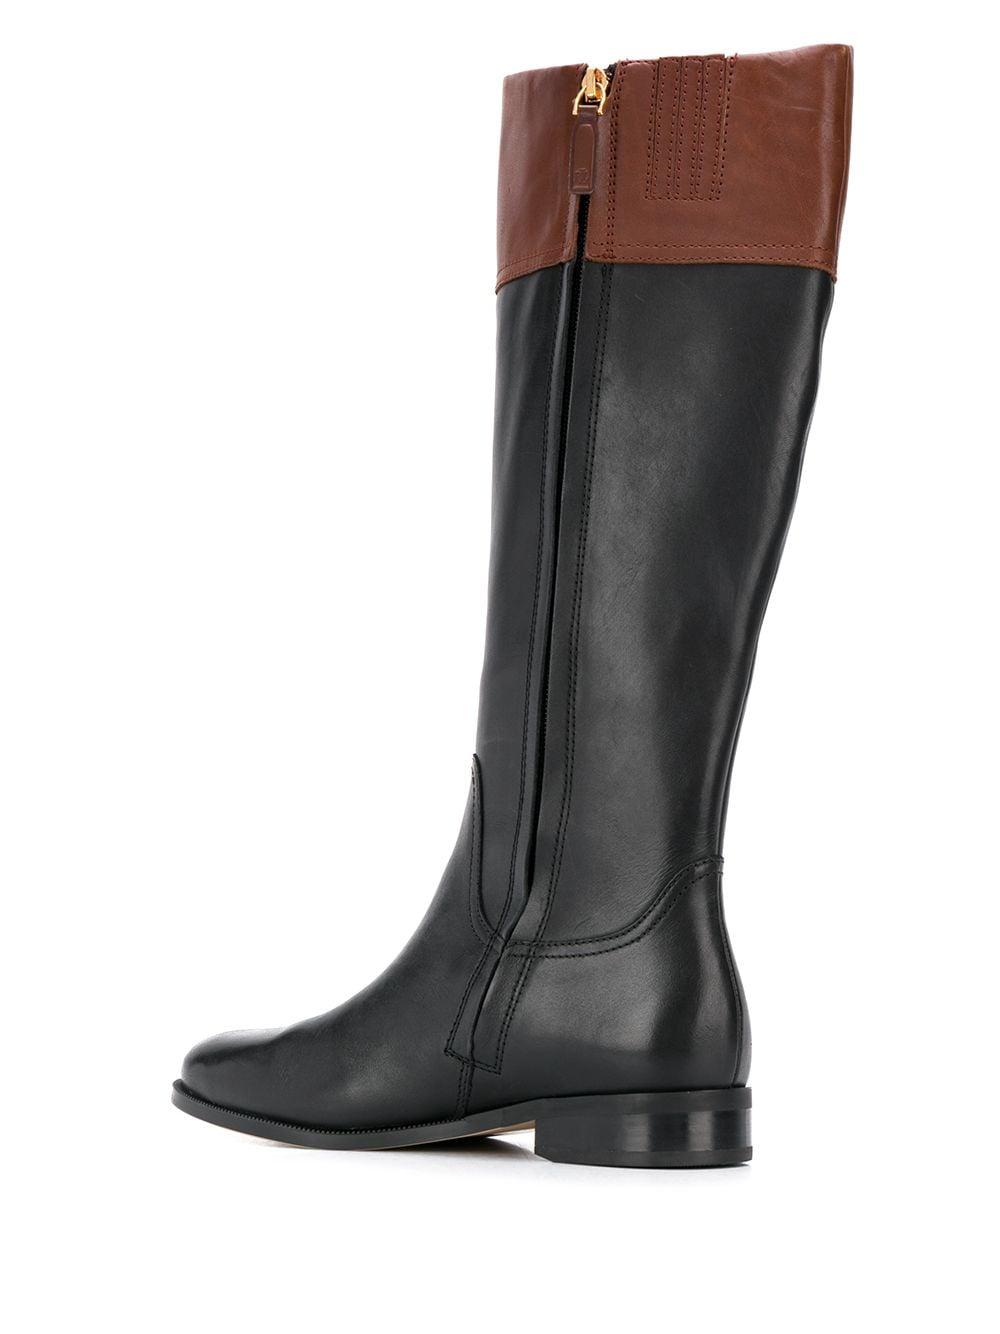 Lauren by Ralph Lauren Leather Two Tone Knee-height Boots in Black - Lyst